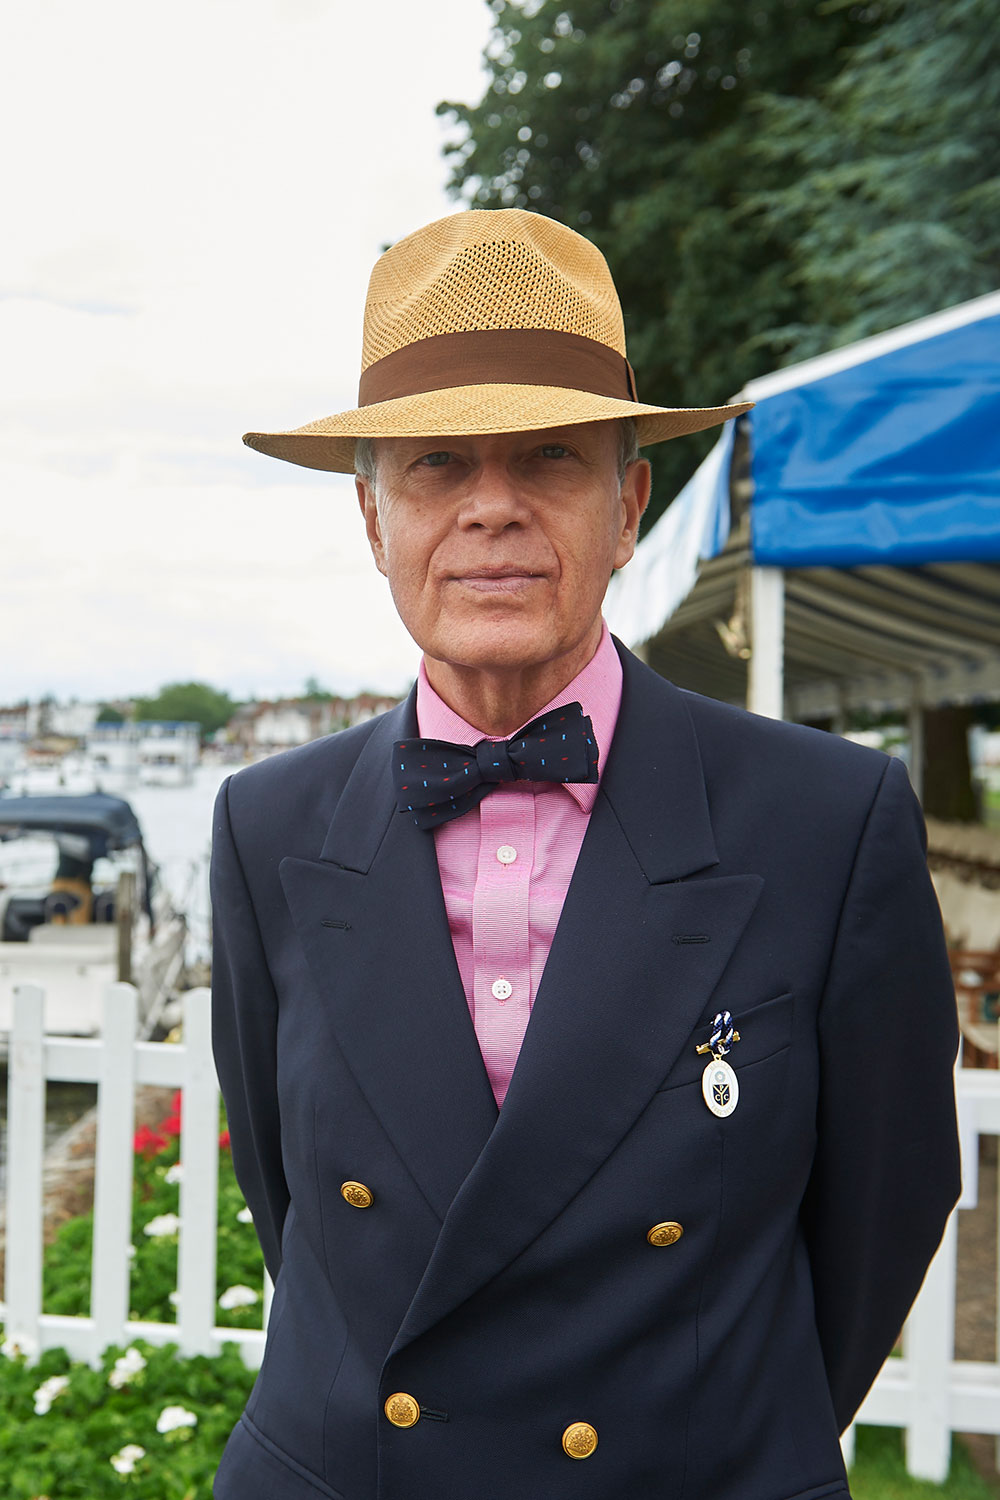 Gentlemen’s dress code at Henley Regatta